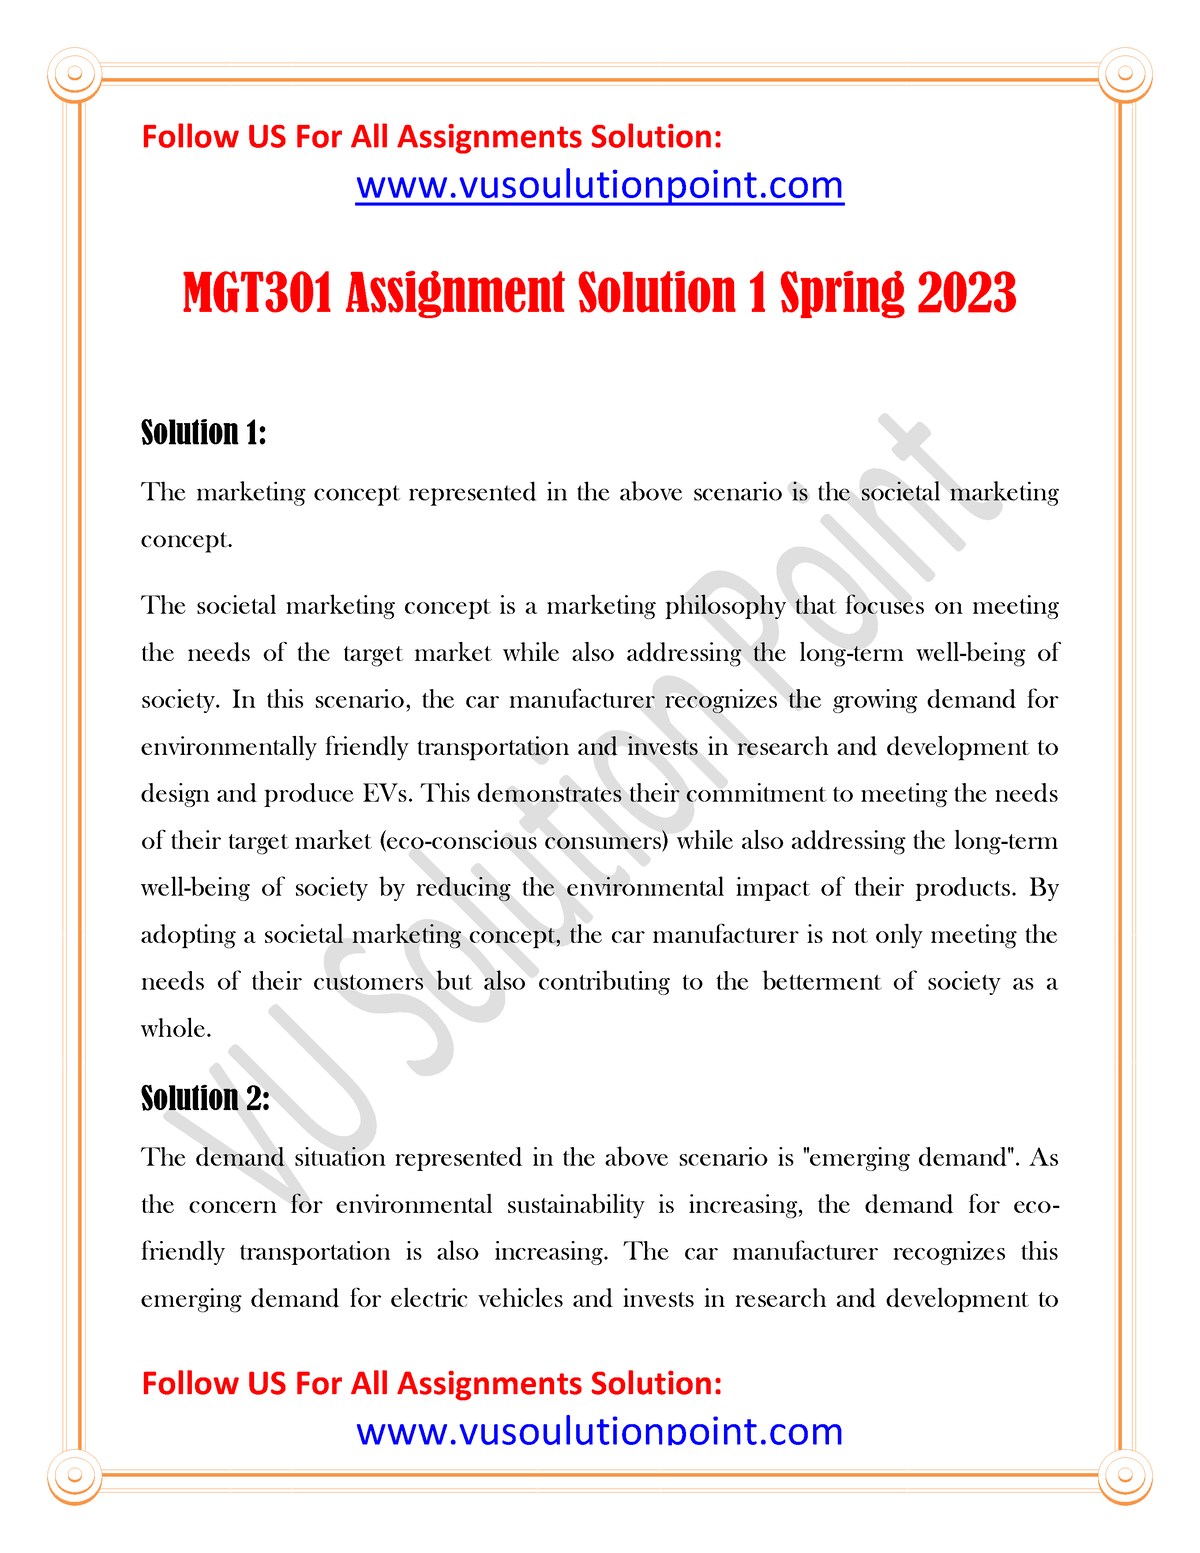 principles of marketing (mgt301) spring 2023 assignment no. 1